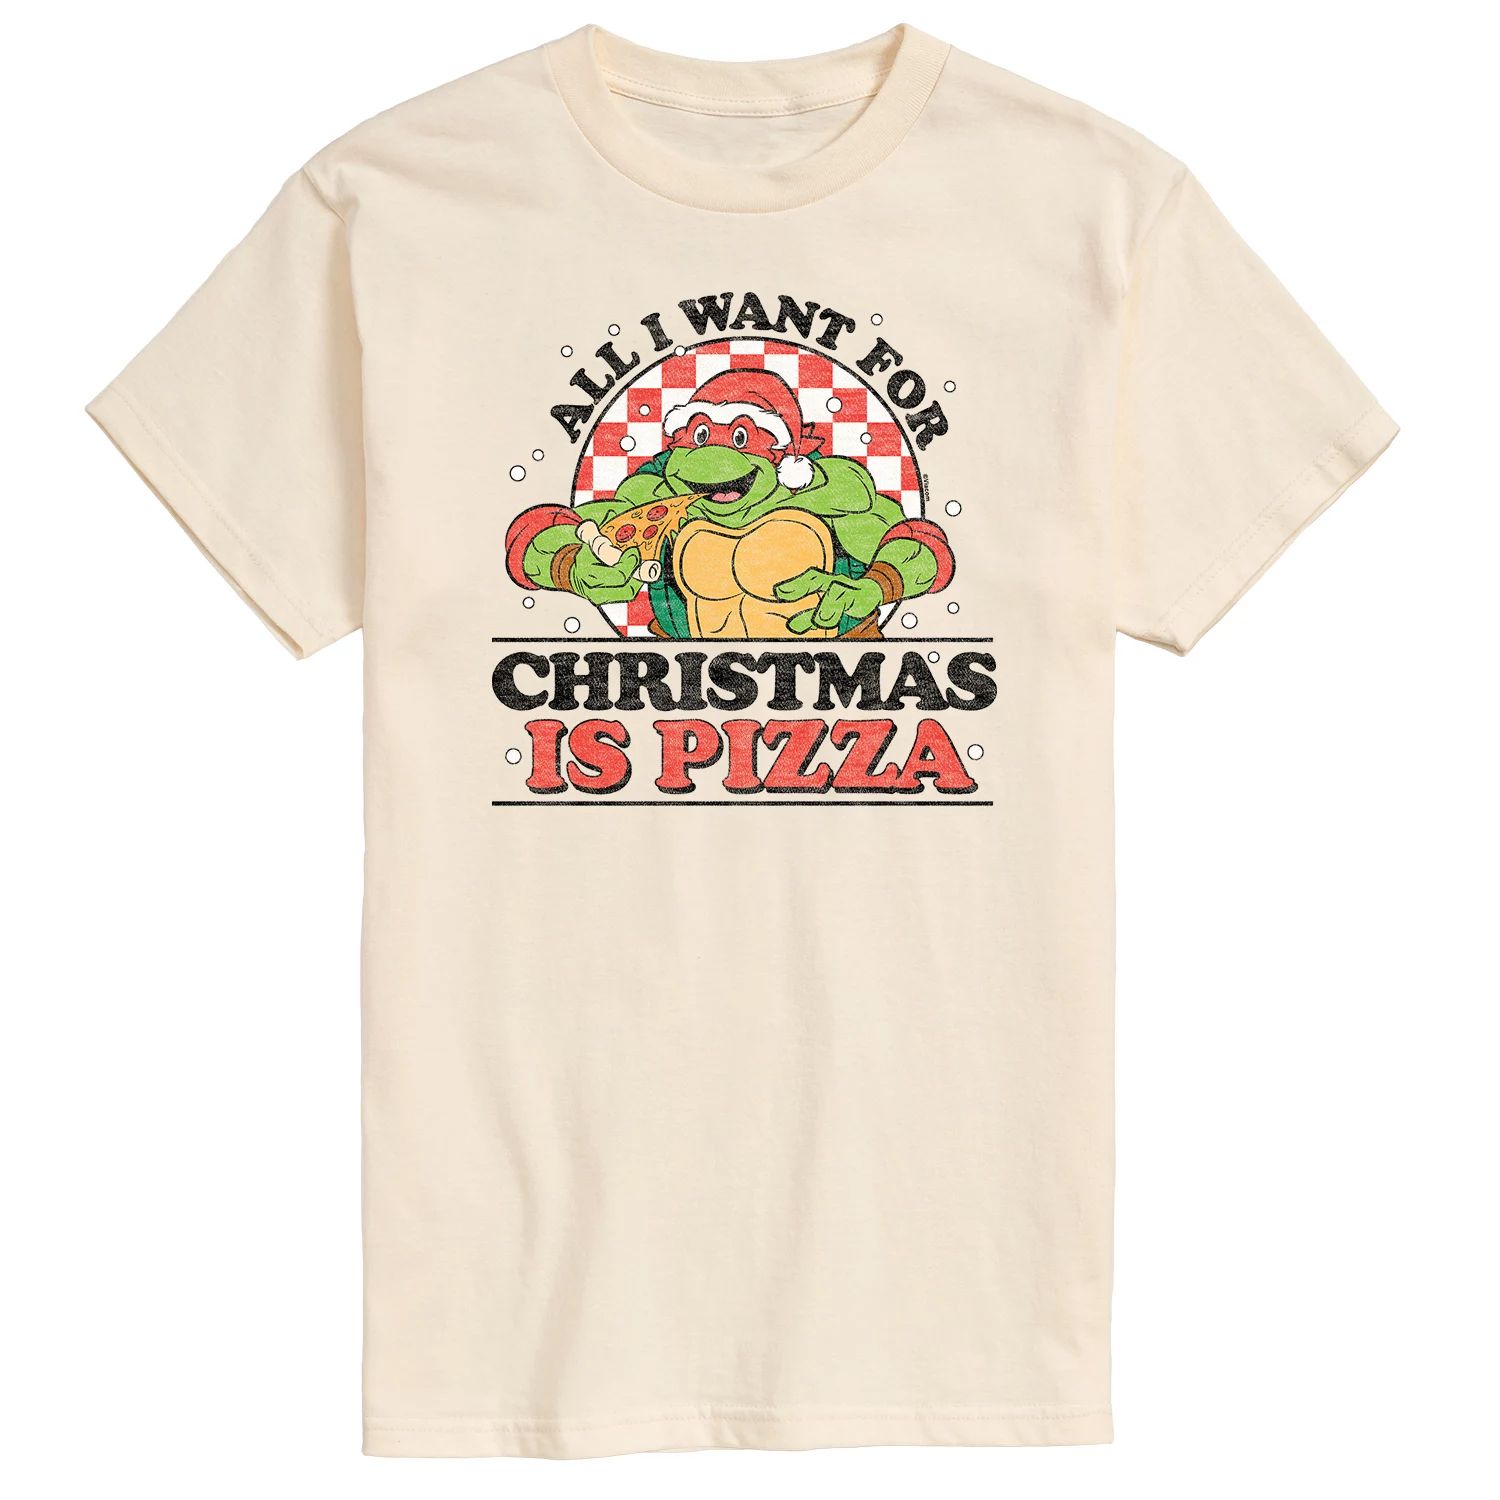 Мужская футболка с рождественской пиццей TMNT Licensed Character